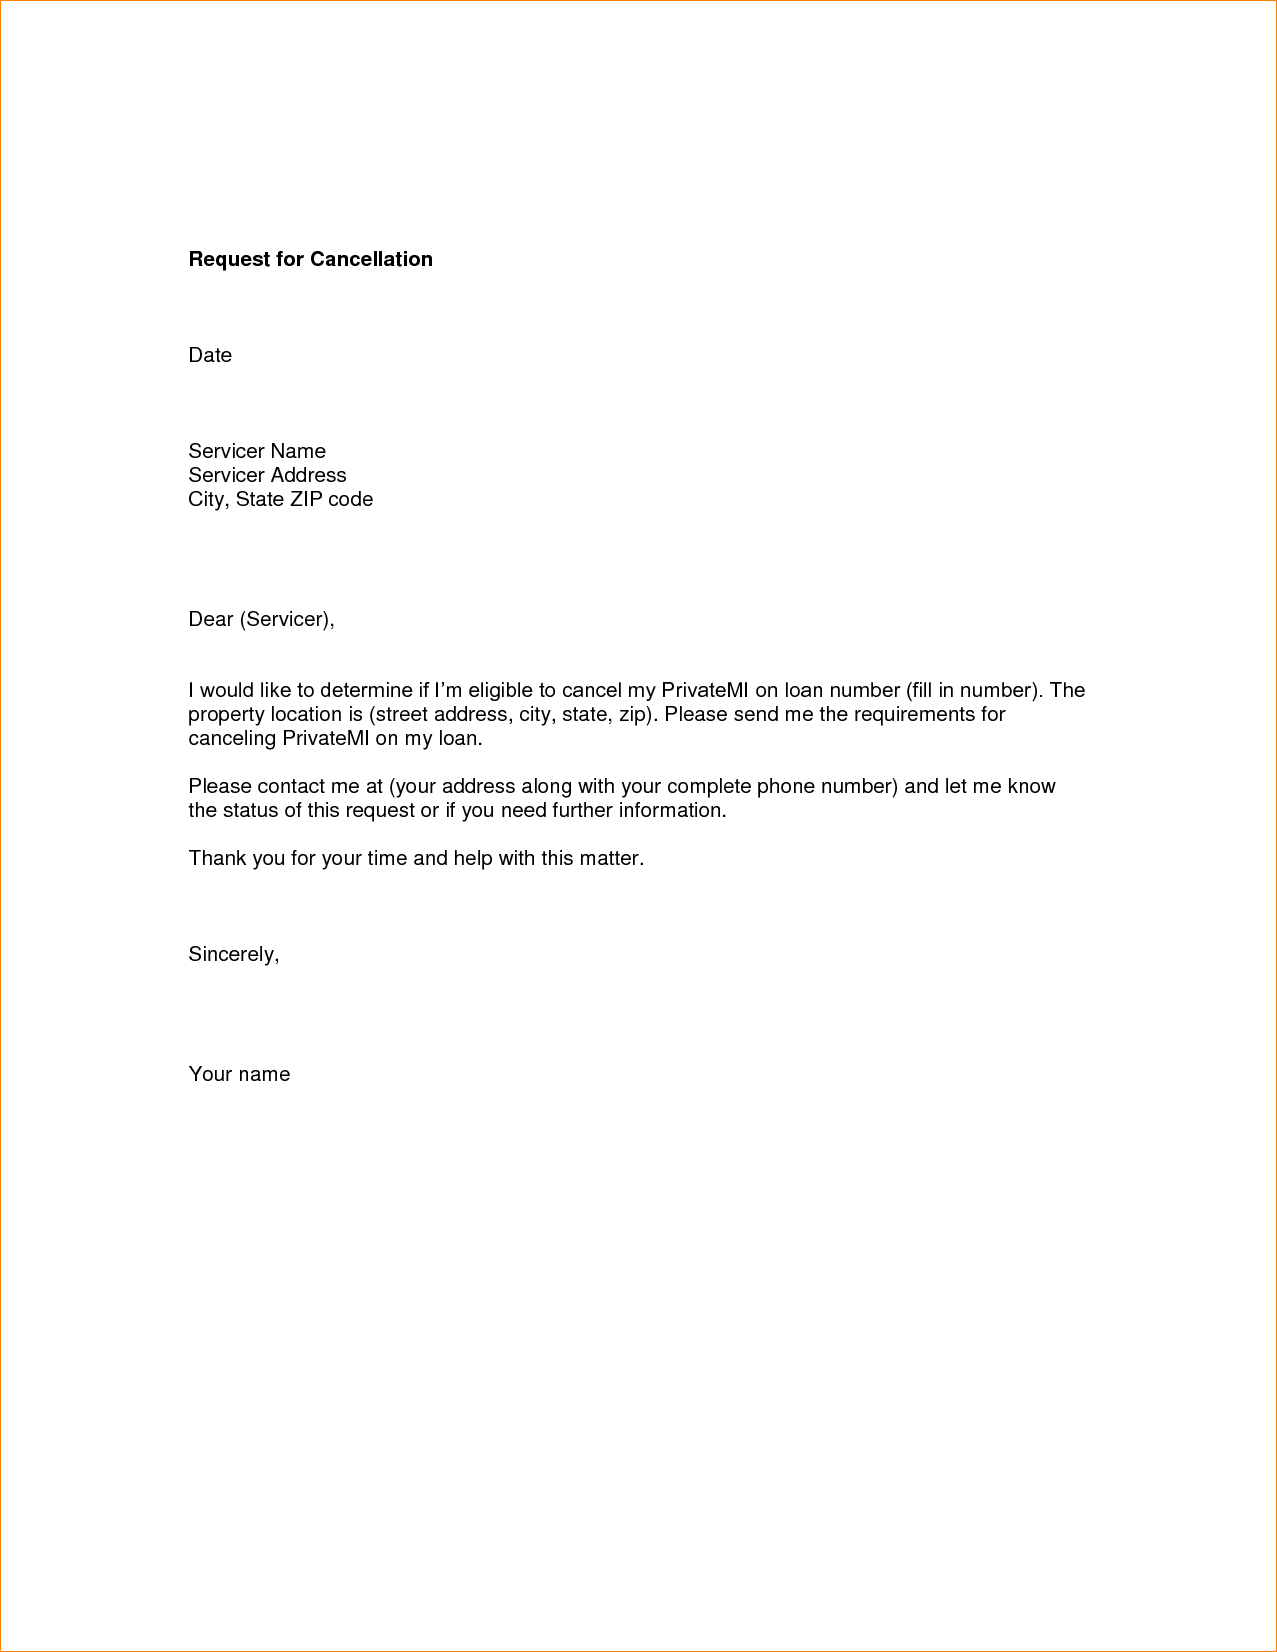 sample cancellation of service letter Romeo.landinez.co